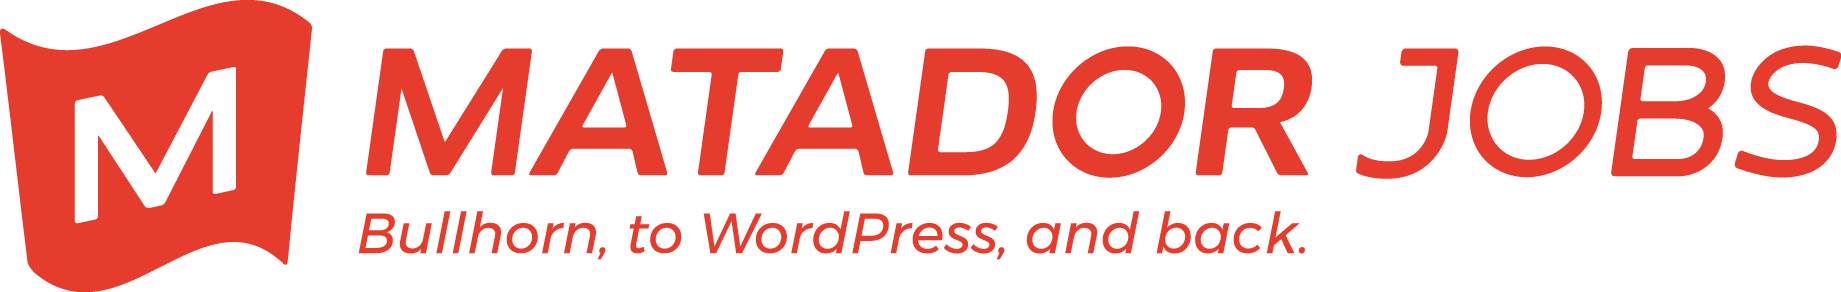 matador-jobs-logo-tagline-red-rgb